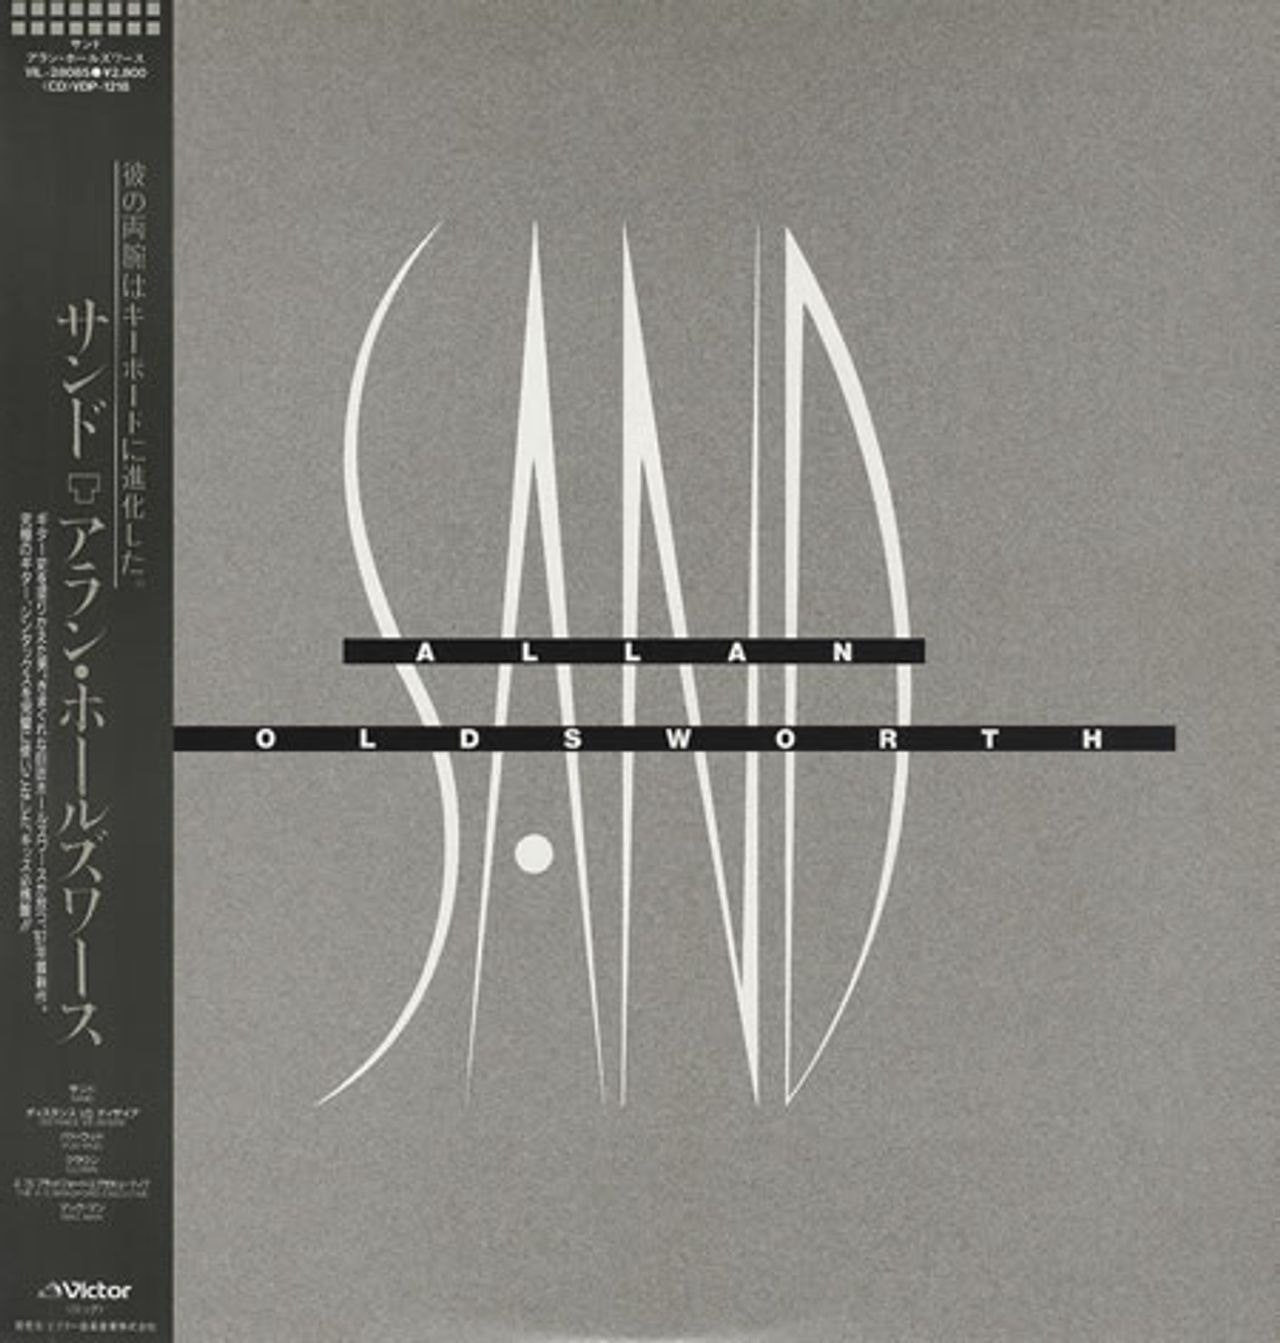 Allan Sand Japanese Vinyl LP RareVinyl.com